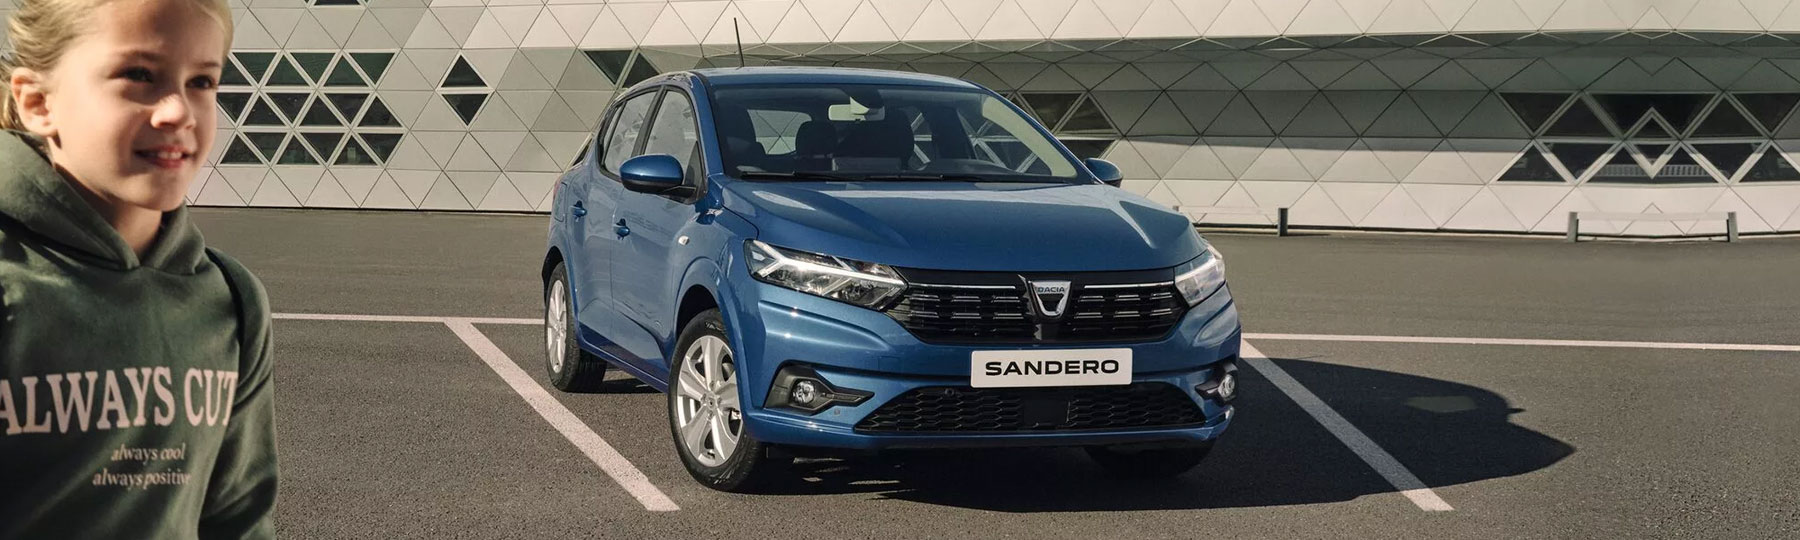 Dacia Sandero New Car Offer